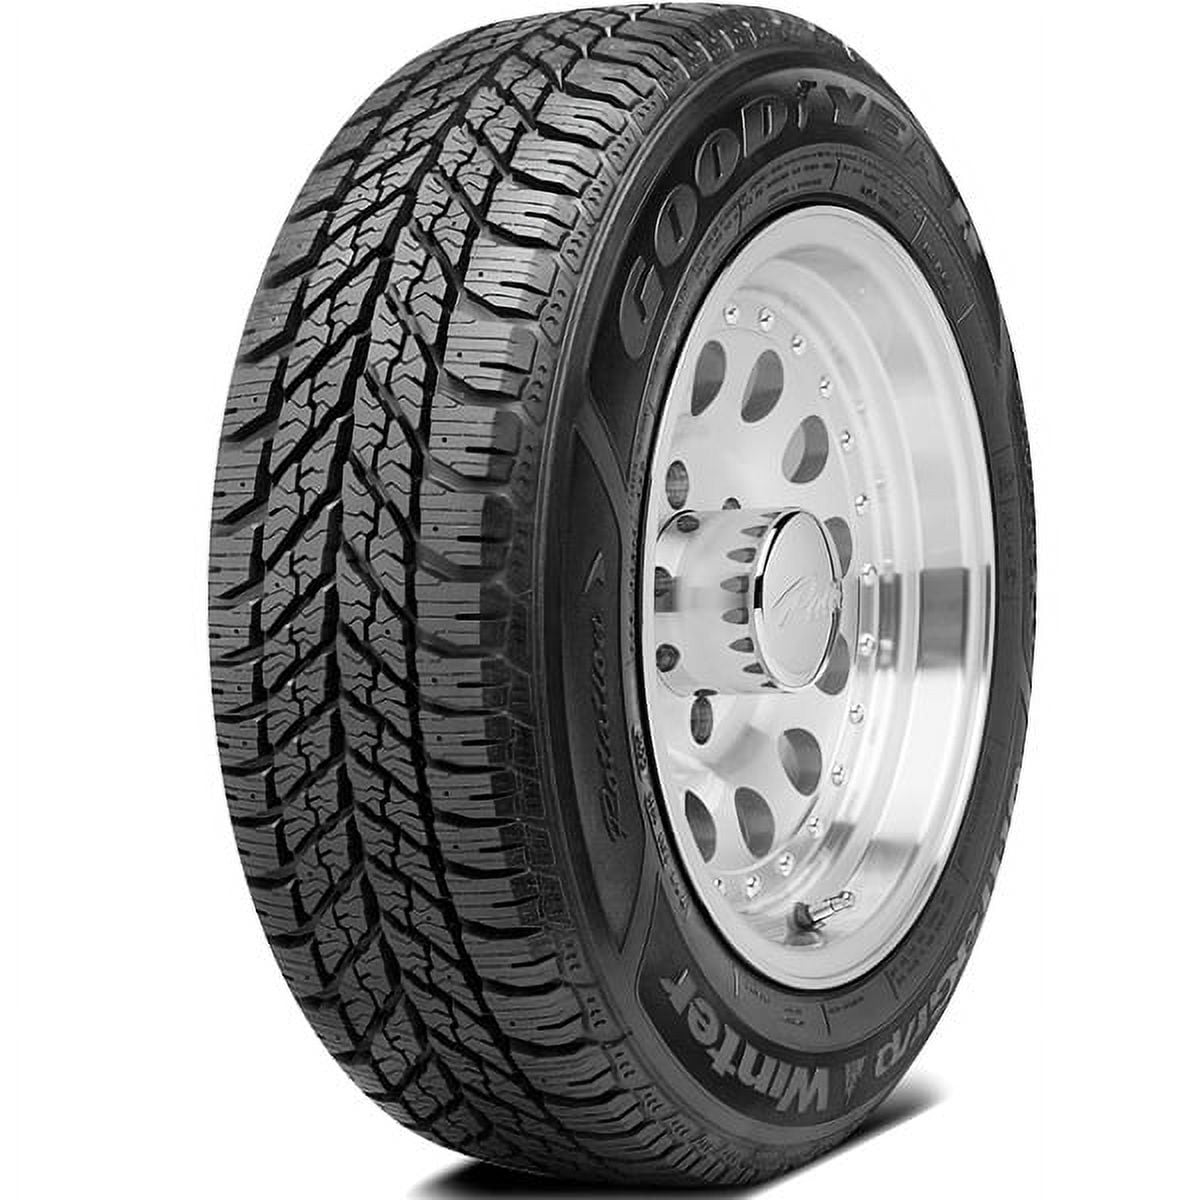 Goodyear Ultra Grip Winter 225/60R17 99 T Tire